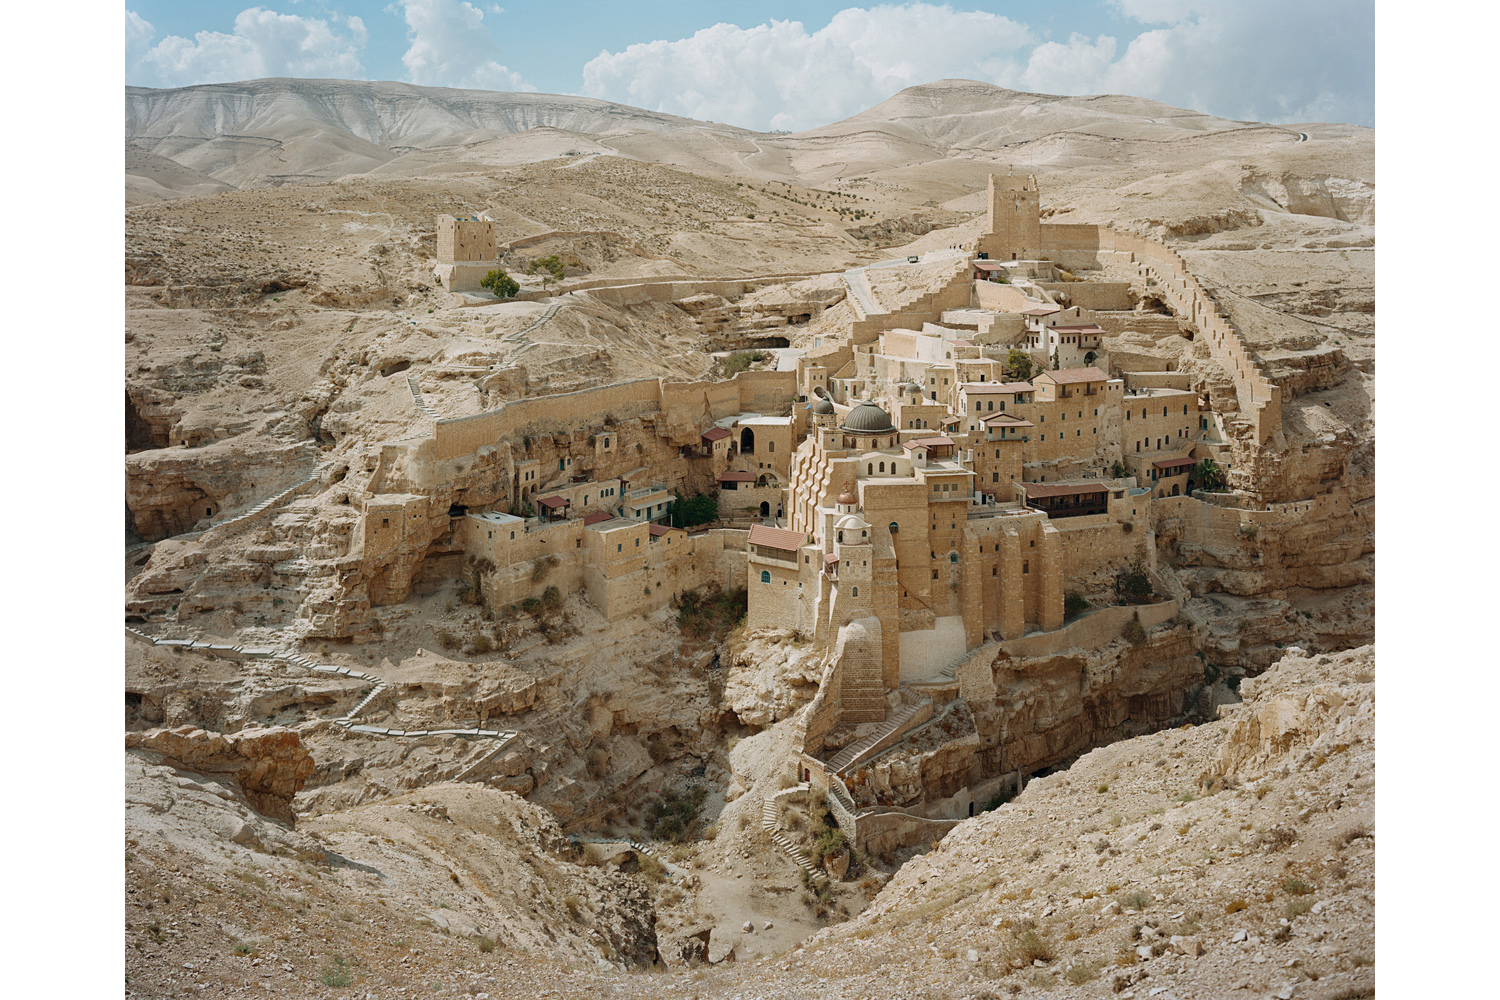 Mar Saba Monastery, Judean Desert, 9/20/09